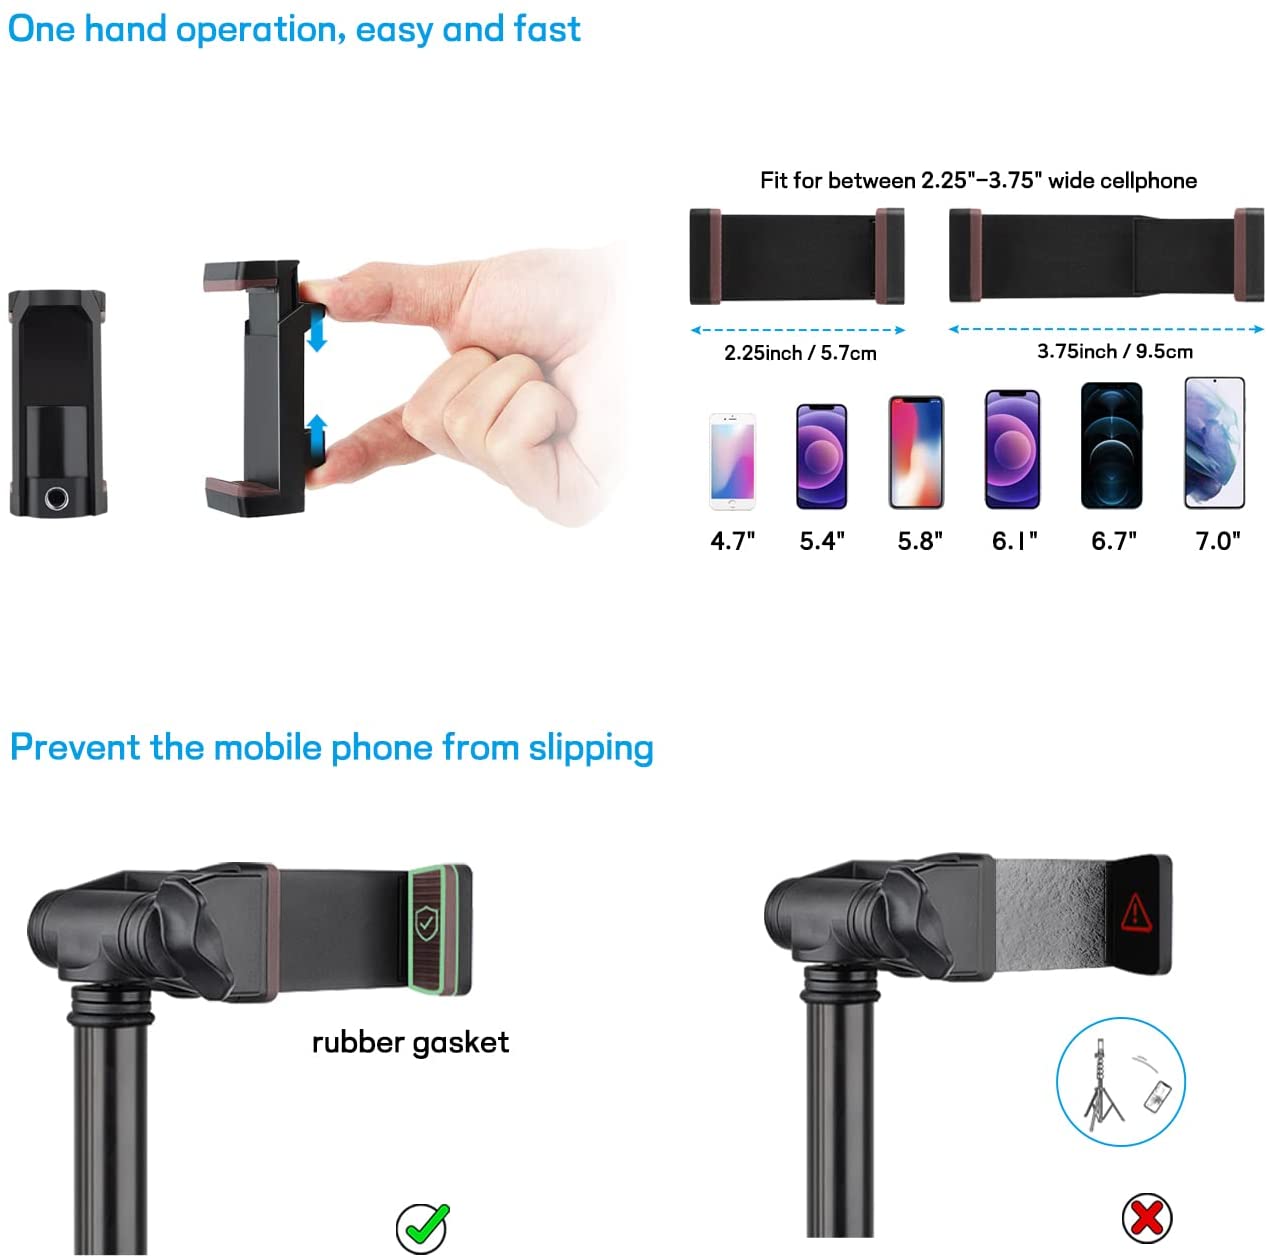 Victiv 68 inch/1.73m Phone Tripod Stand, Selfie Stick Tripod with Remote & Smatrphone Tripod, UPGRADE Foldable Camera Tripod for iphone/Samsung/Huawei/Mobile Phone